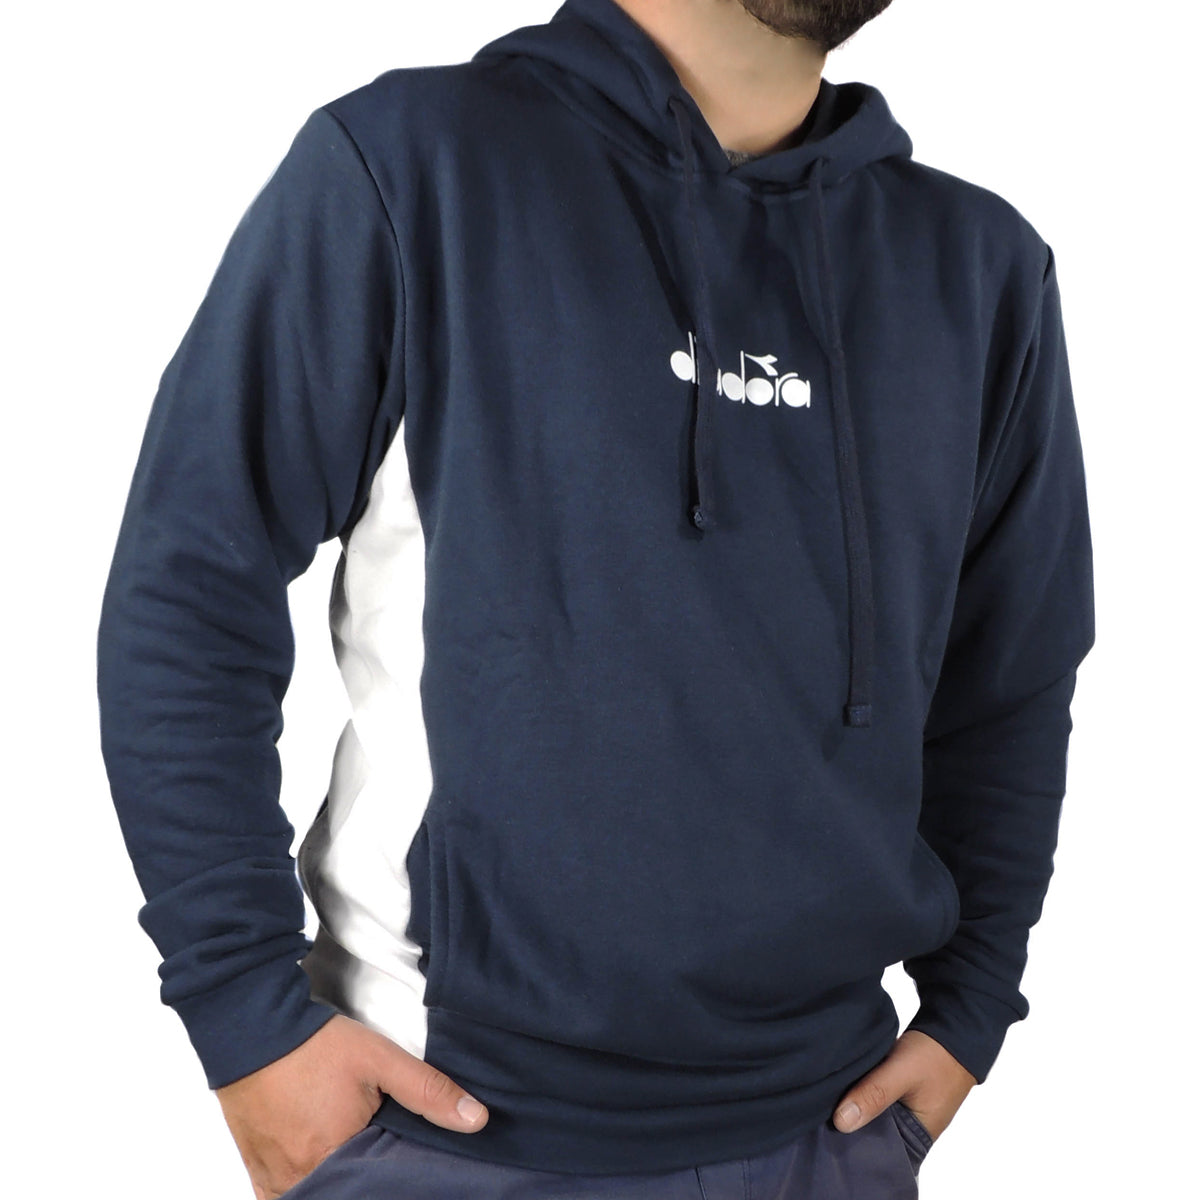 carlo-hoodie#marino